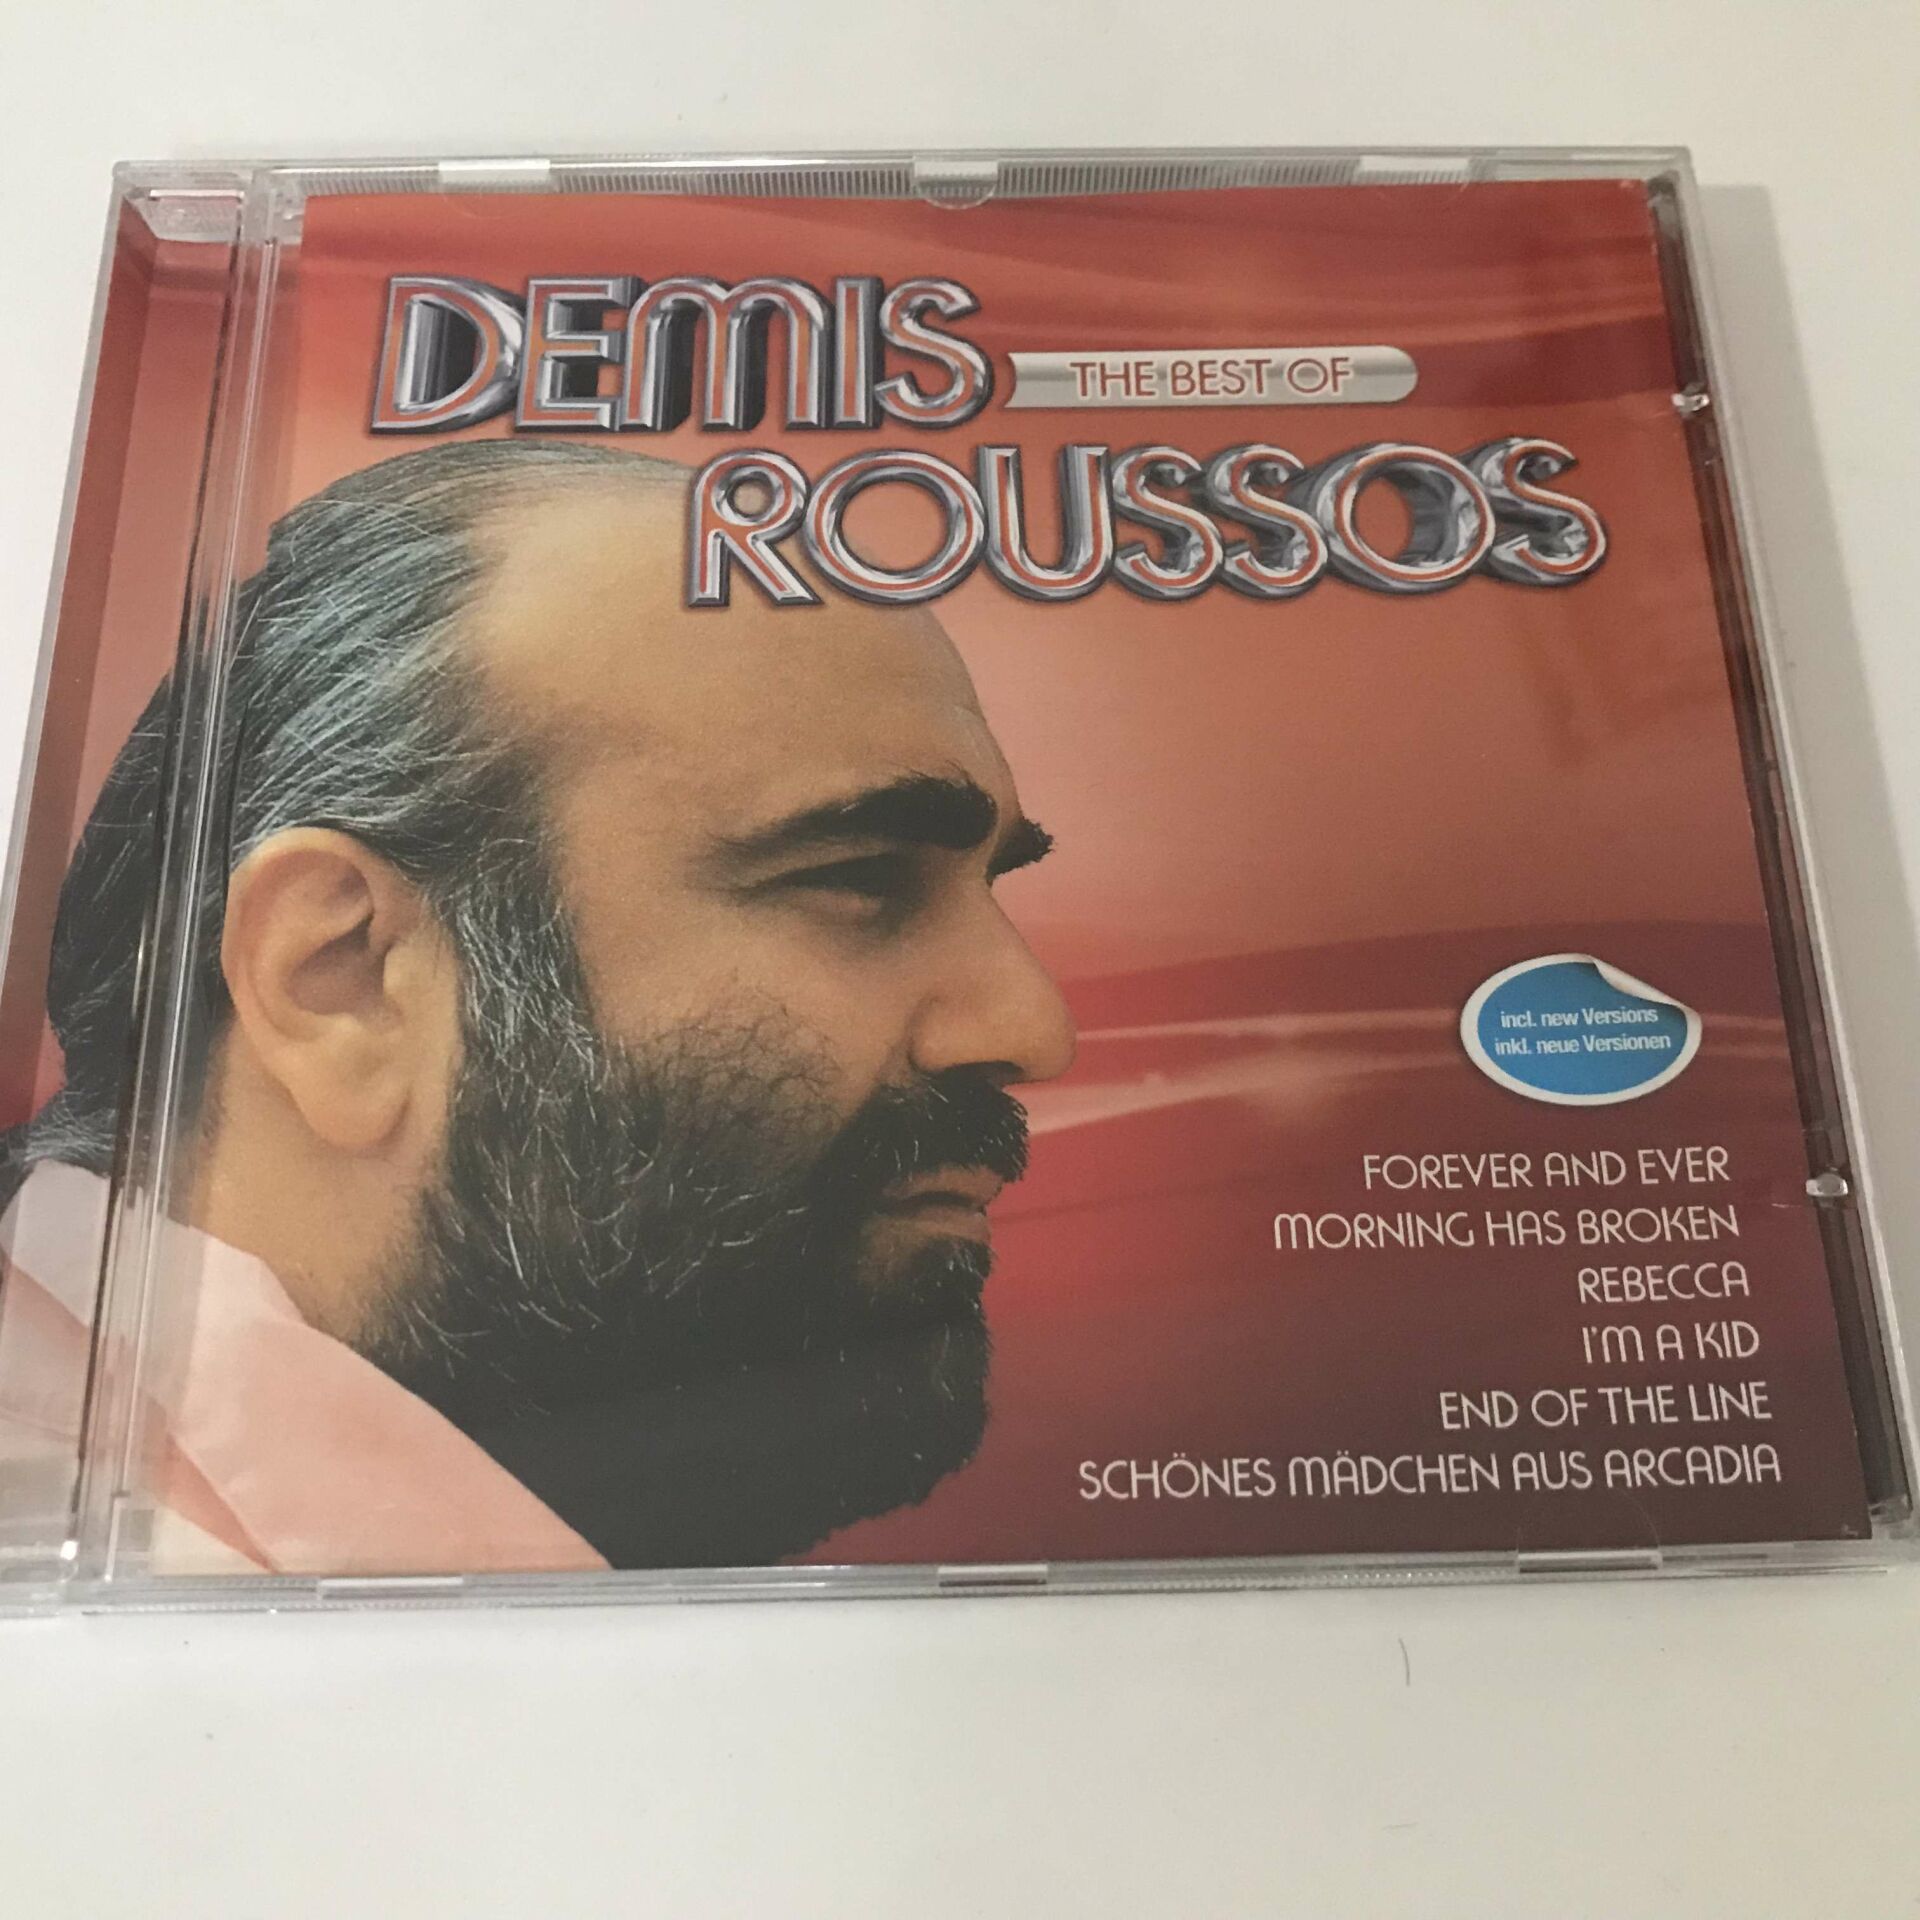 Demis Roussos – The Best Of